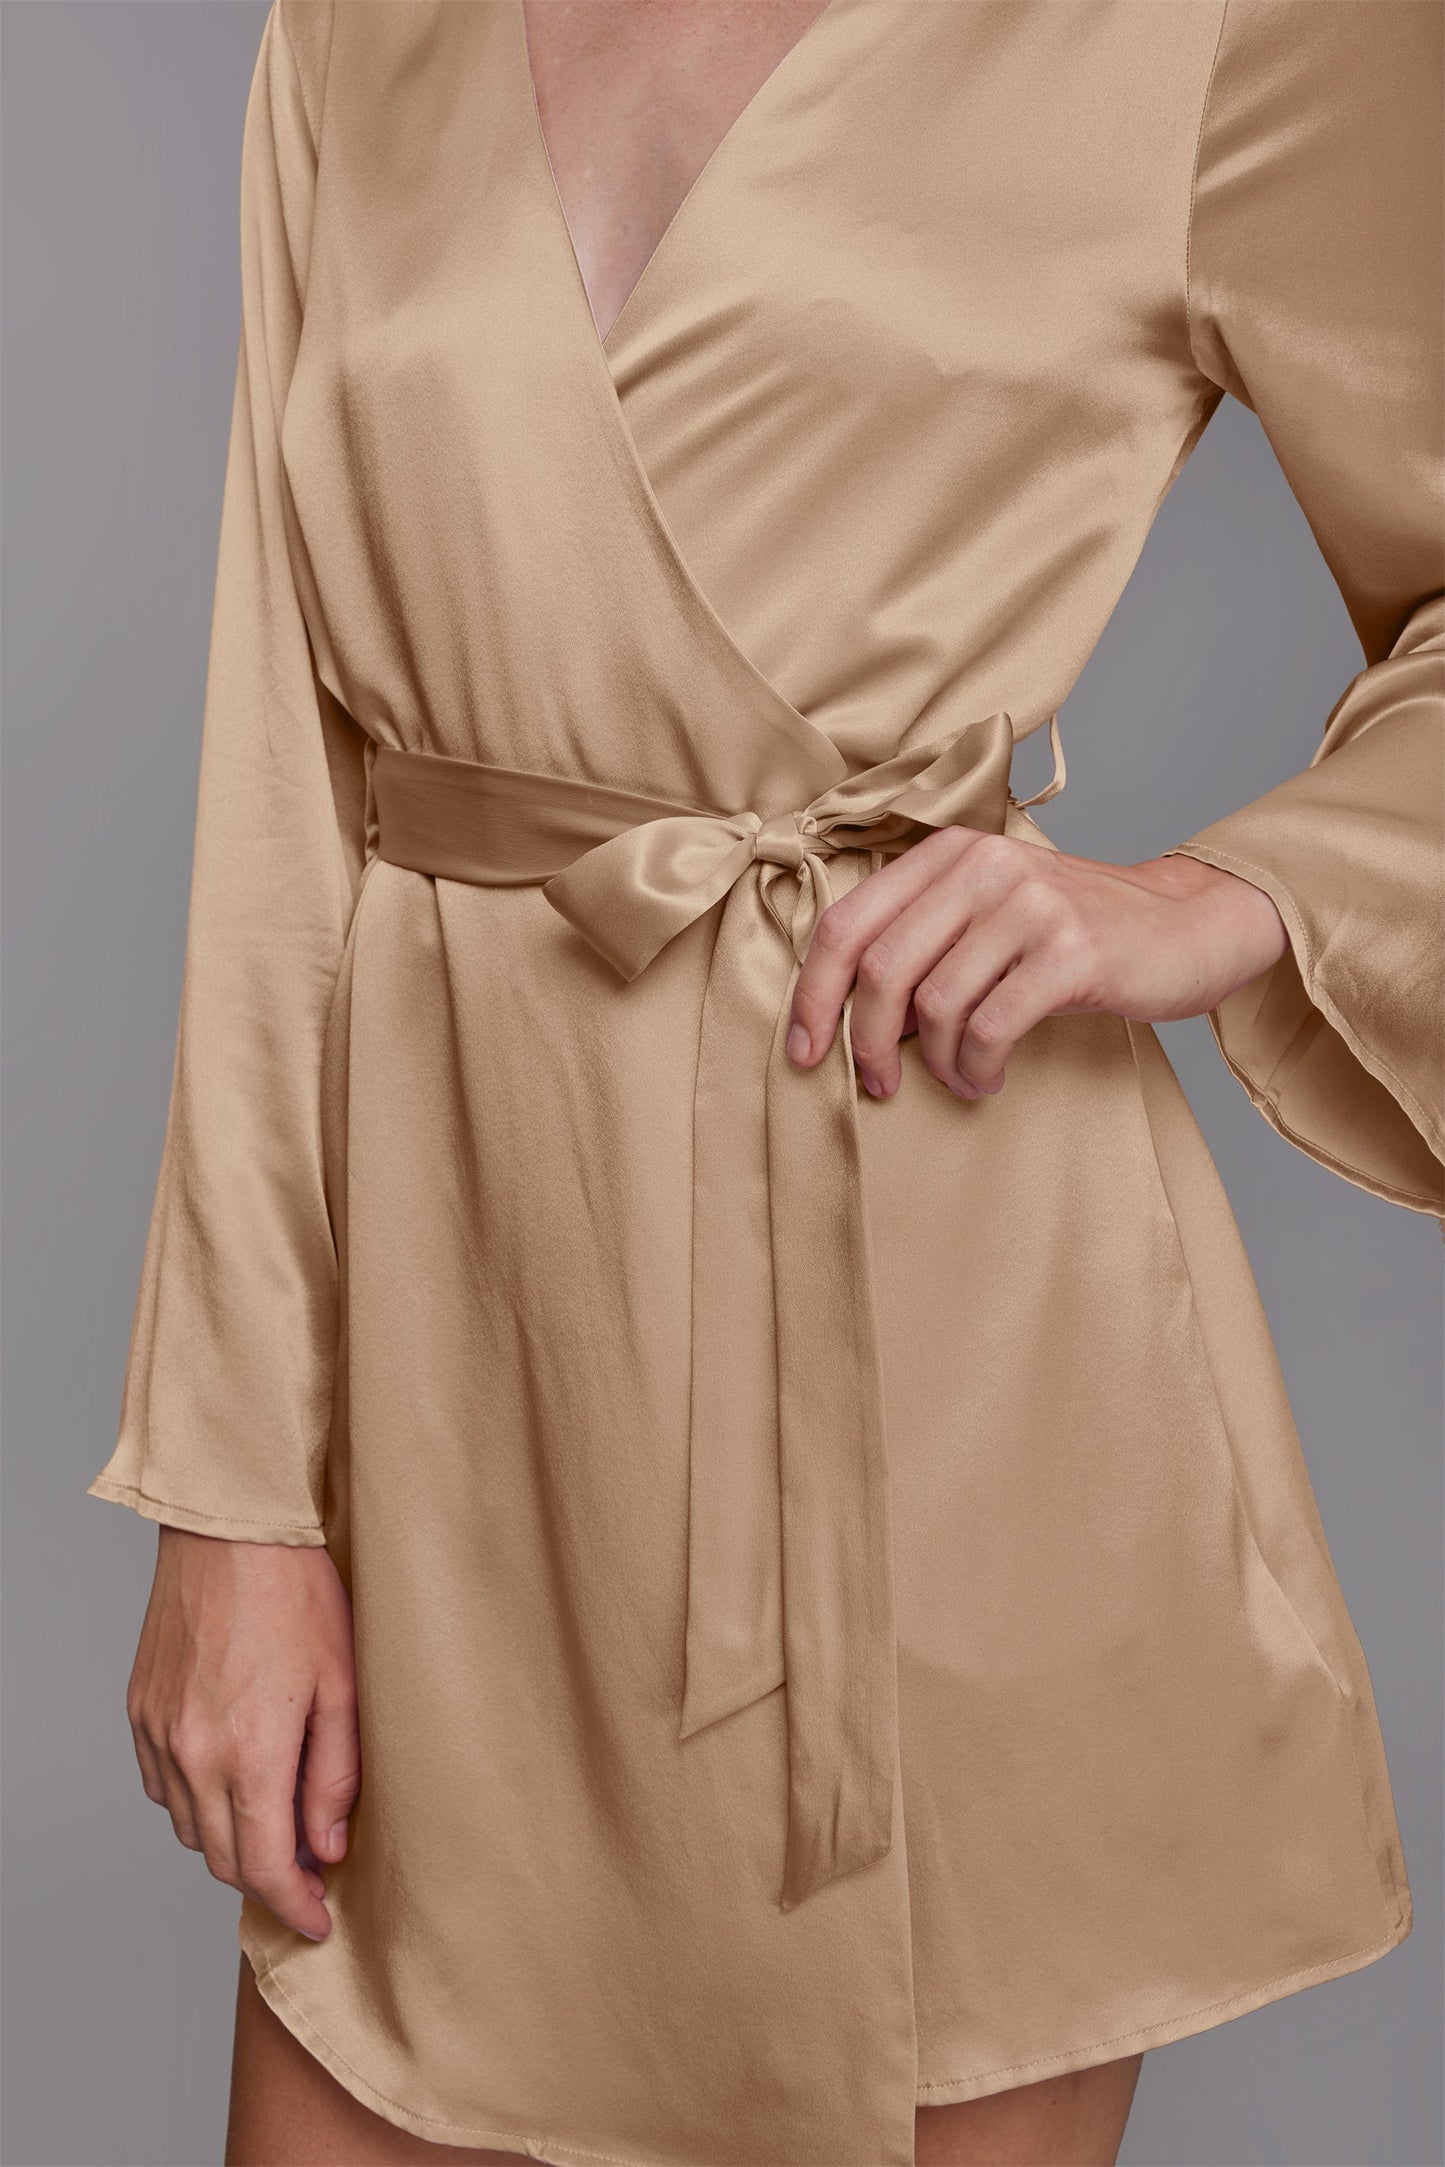 GRALACE Silk Sleepwear Short Robe